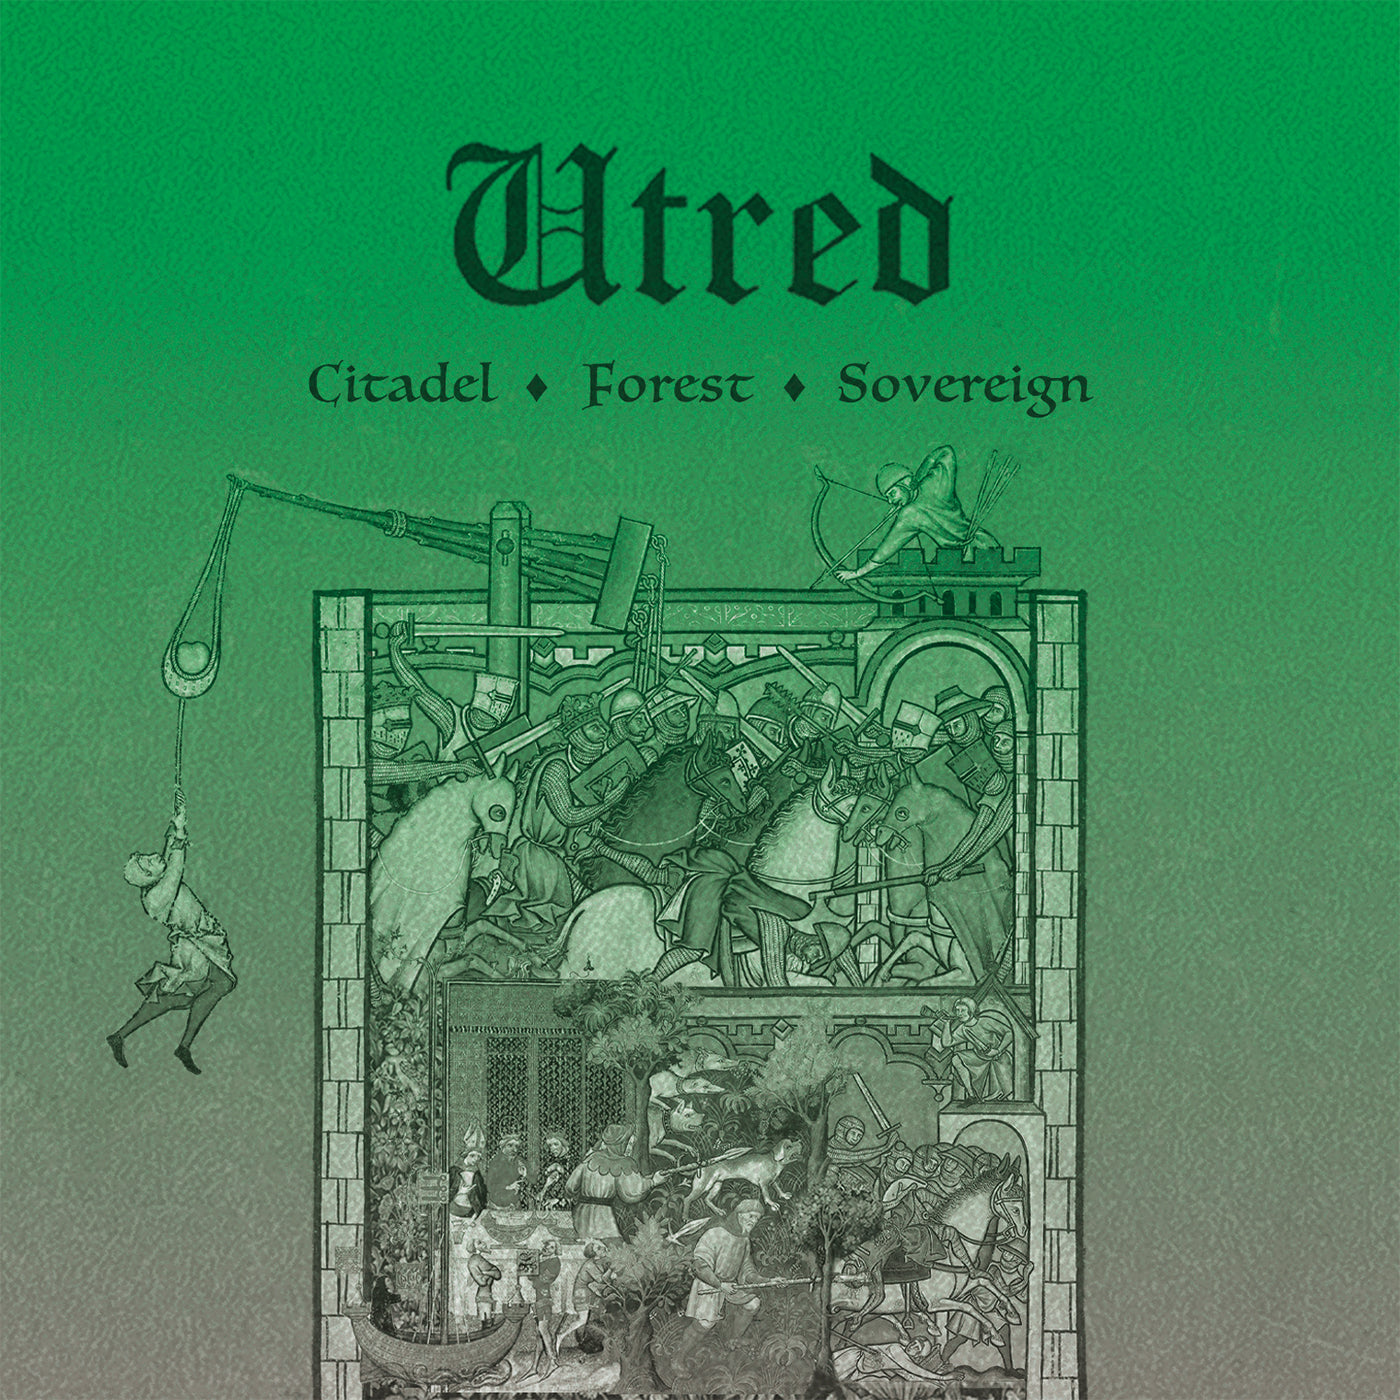 UTRED "Citadel - Forest - Sovereign" double CD (2xCD digipak)